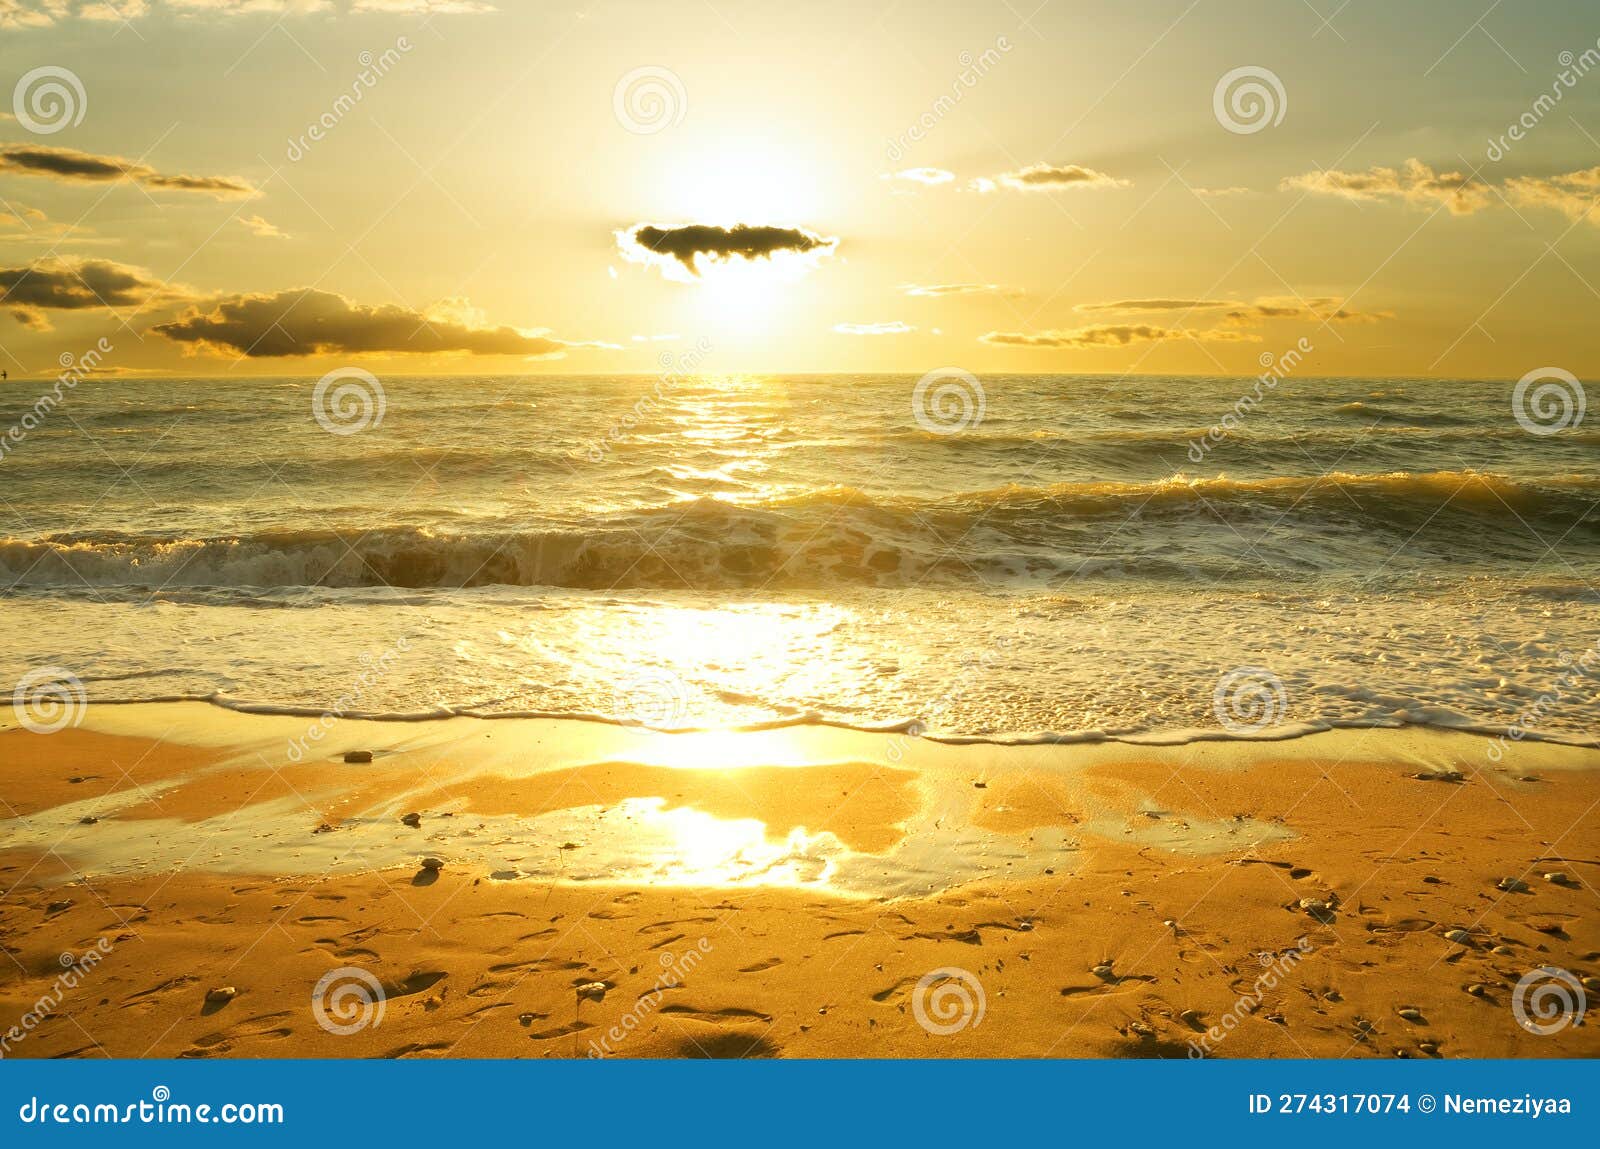 sea at sunset. peacefull summer seascape.